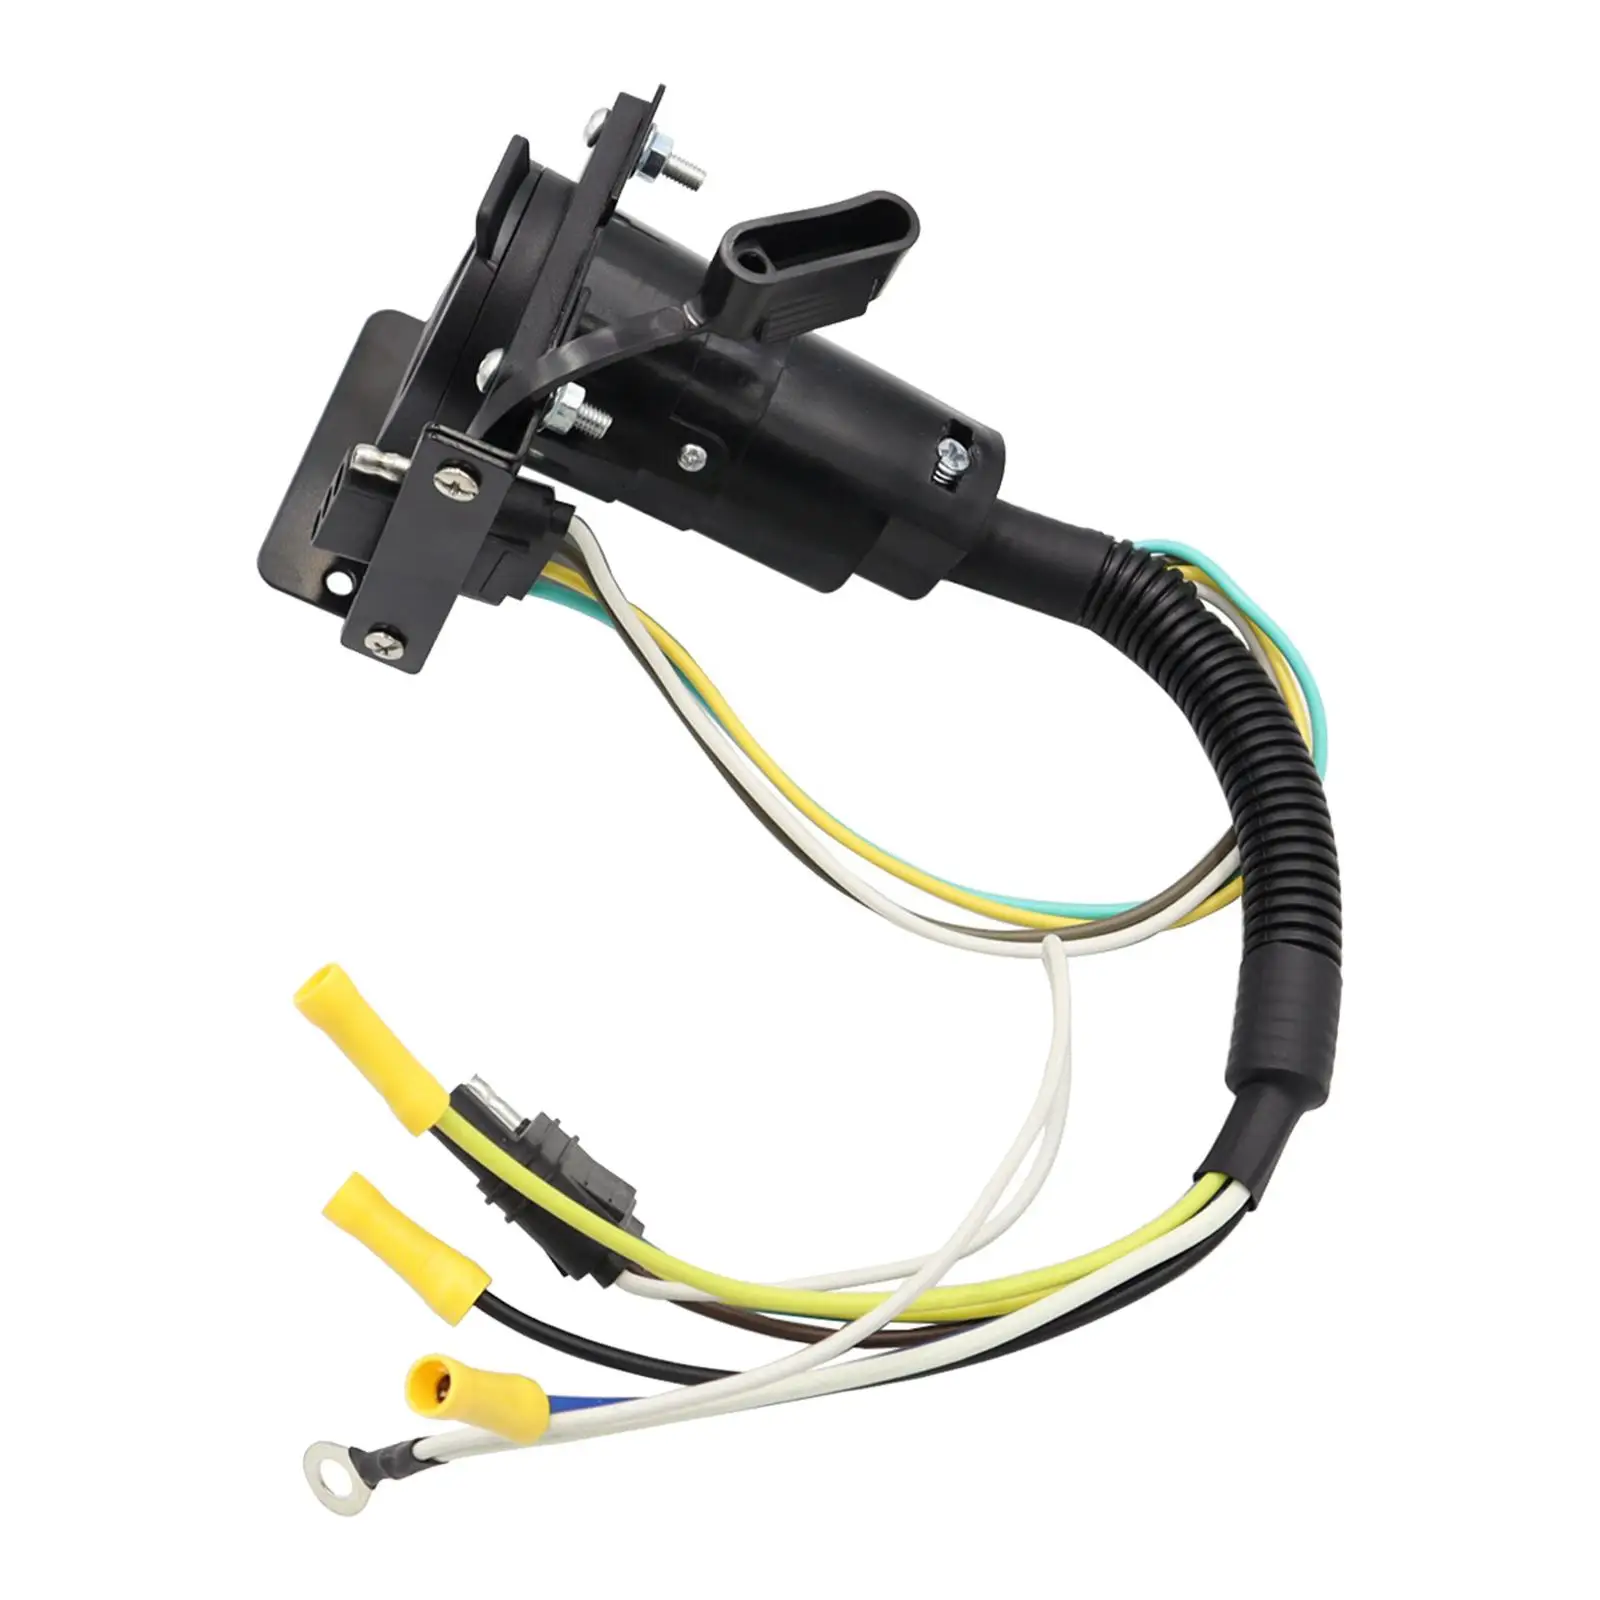 Adapter Connector Kit Professional Accessories Caravan